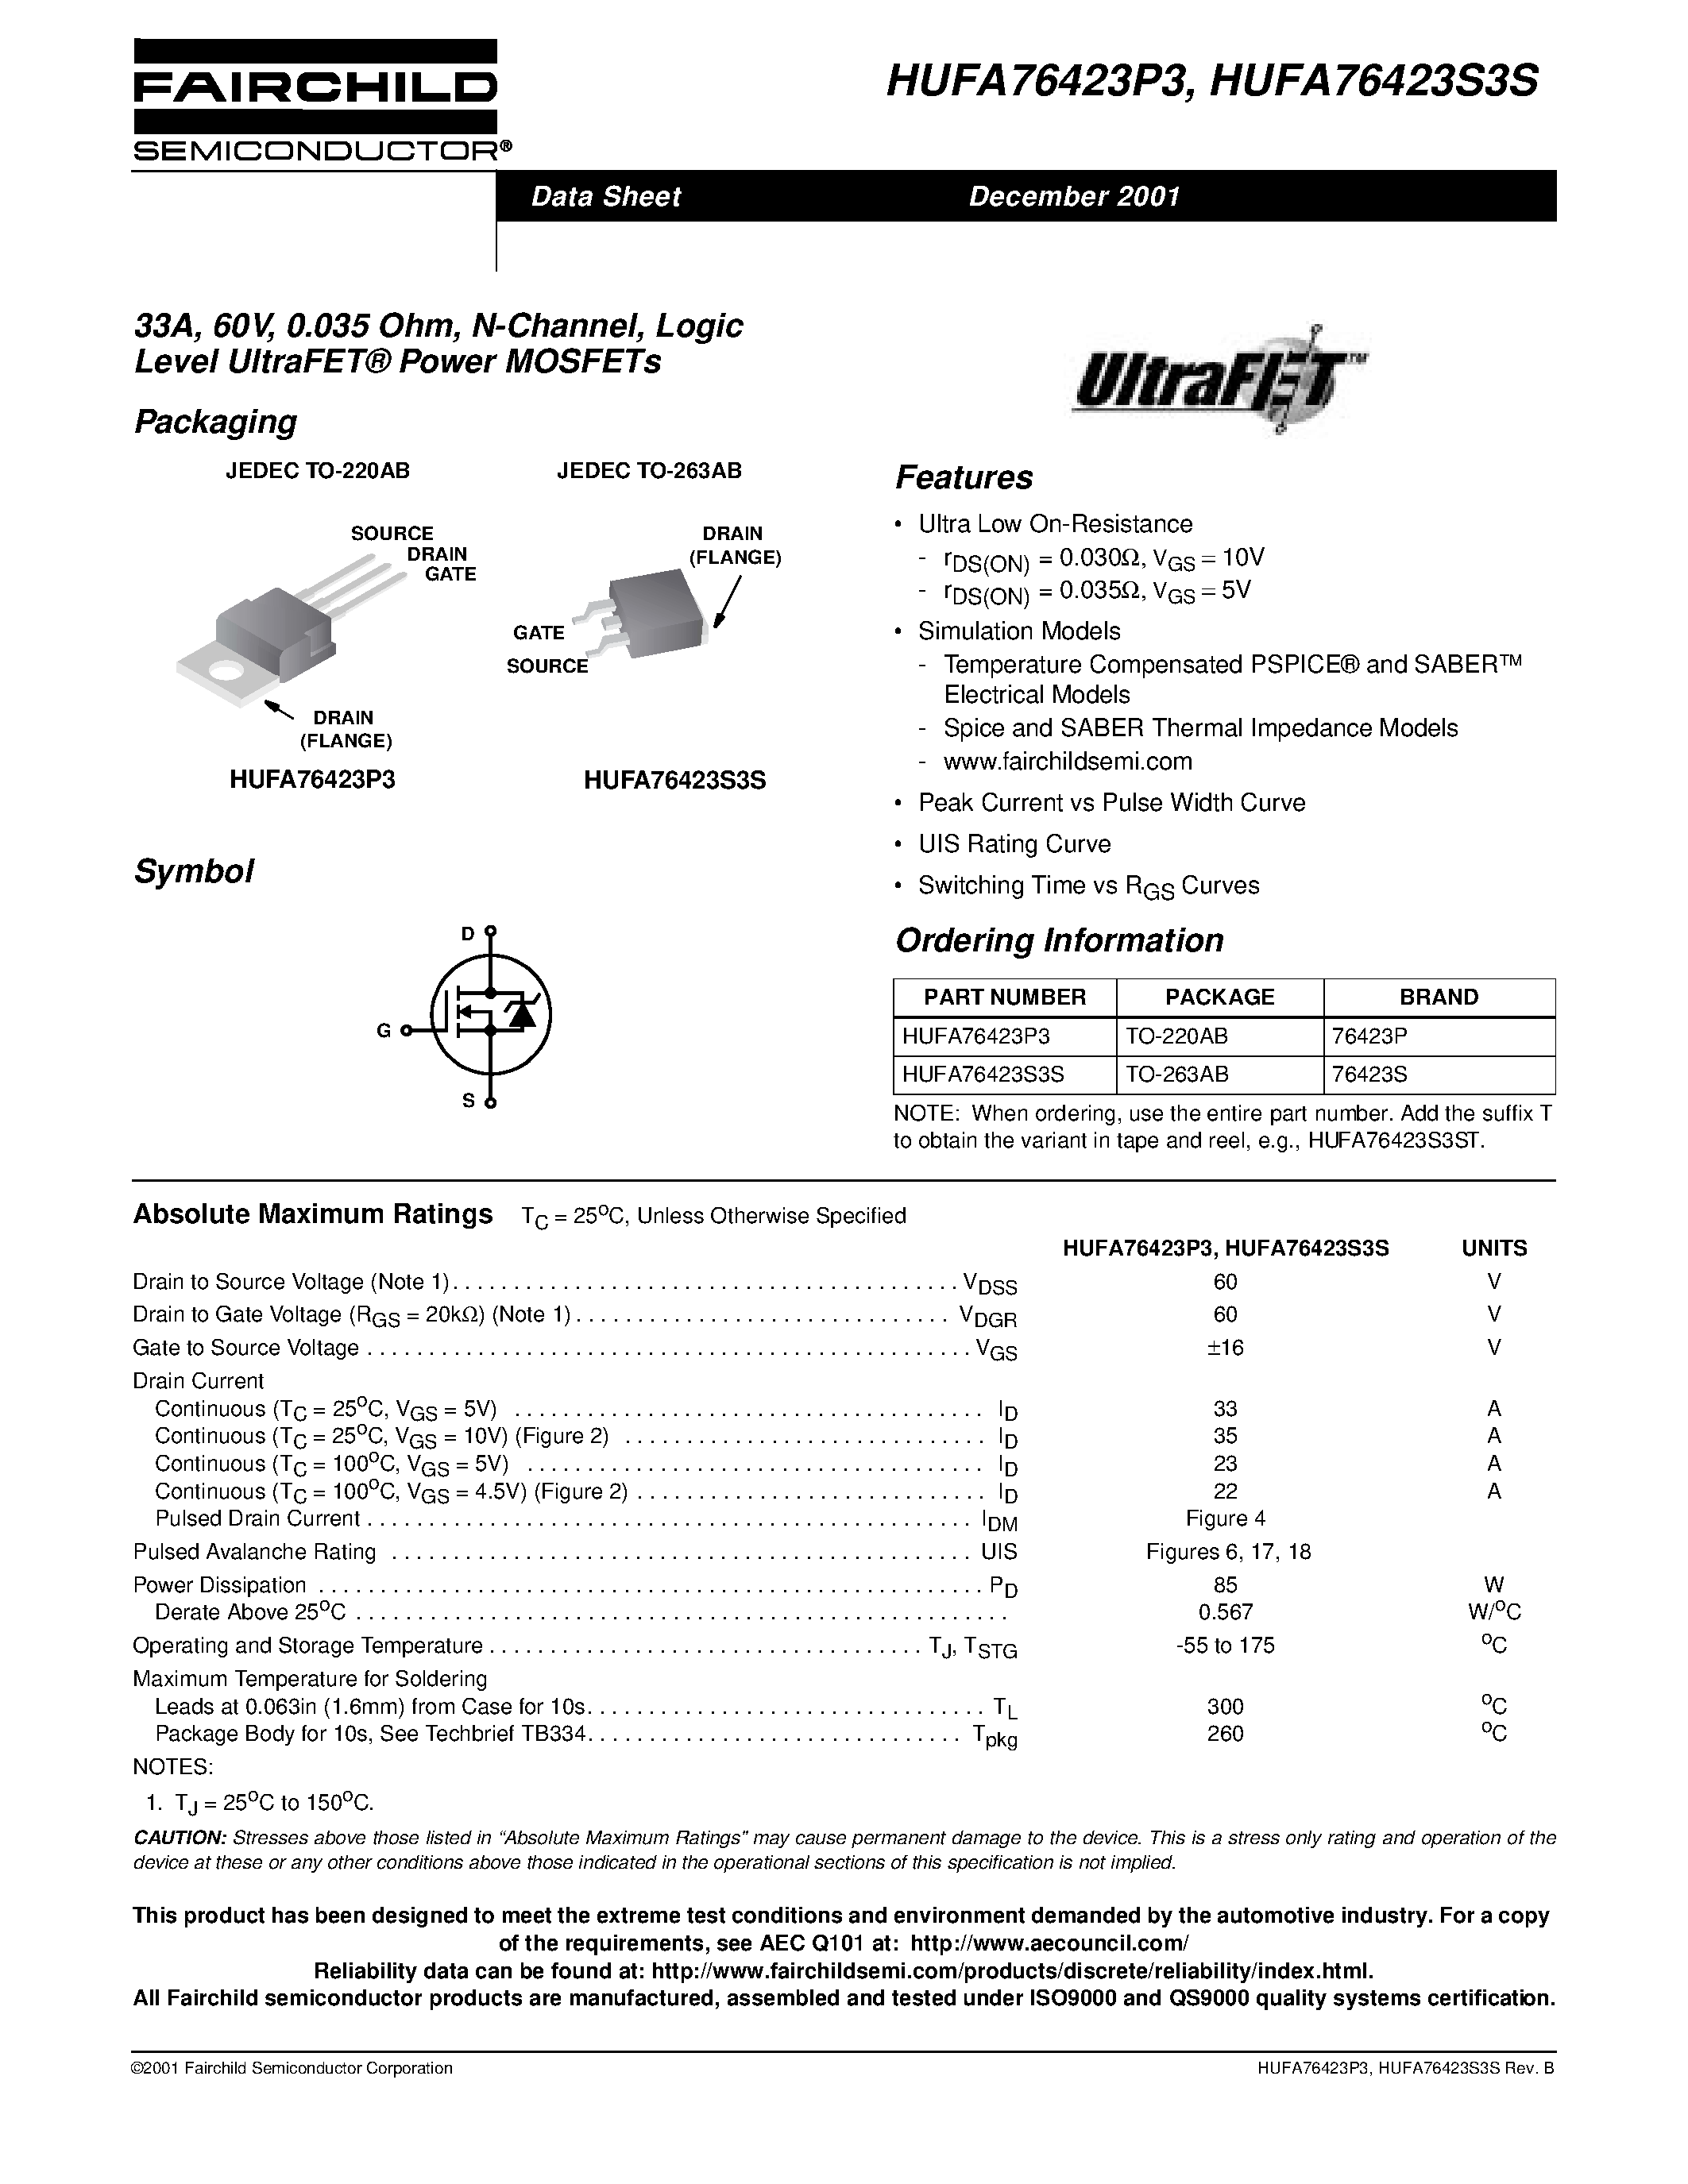 Даташит HUFA76423P3 - 33A/ 60V/ 0.035 Ohm/ N-Channel/ Logic Level UltraFET Power MOSFETs страница 1